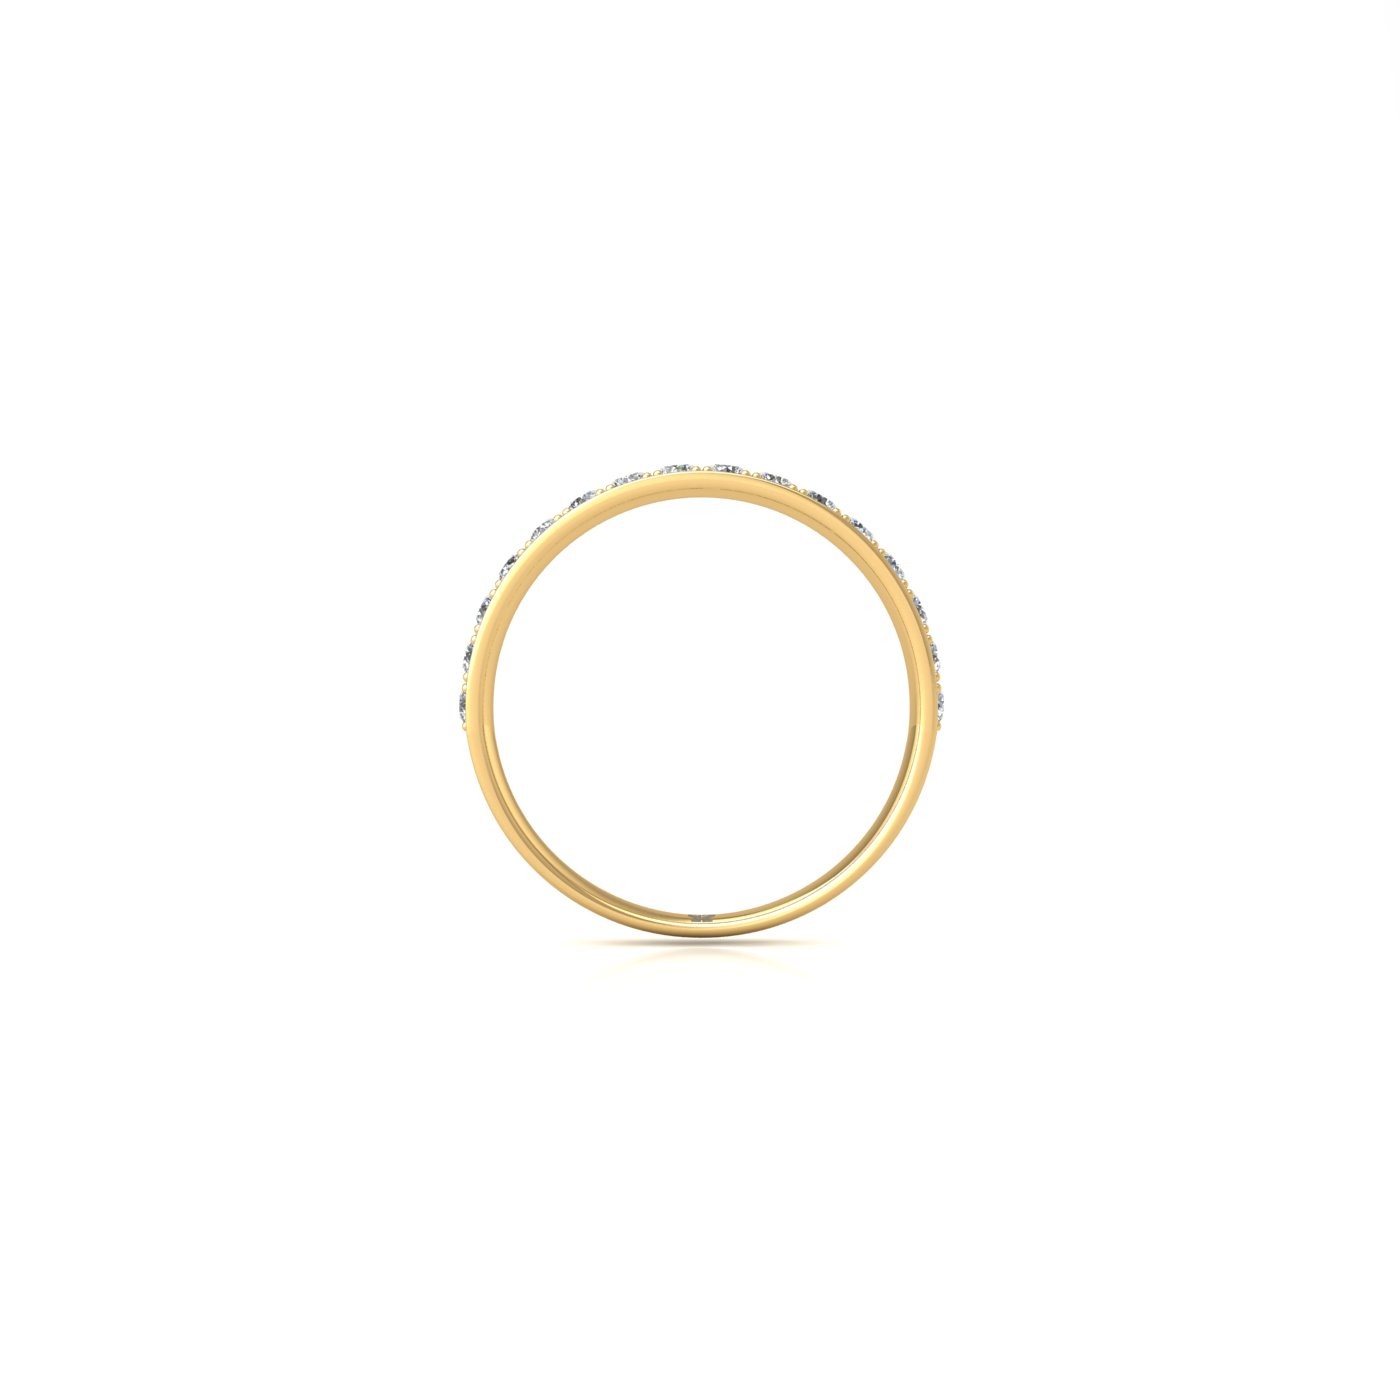 18k yellow gold  round shape diamond channel prong set half eternity ring